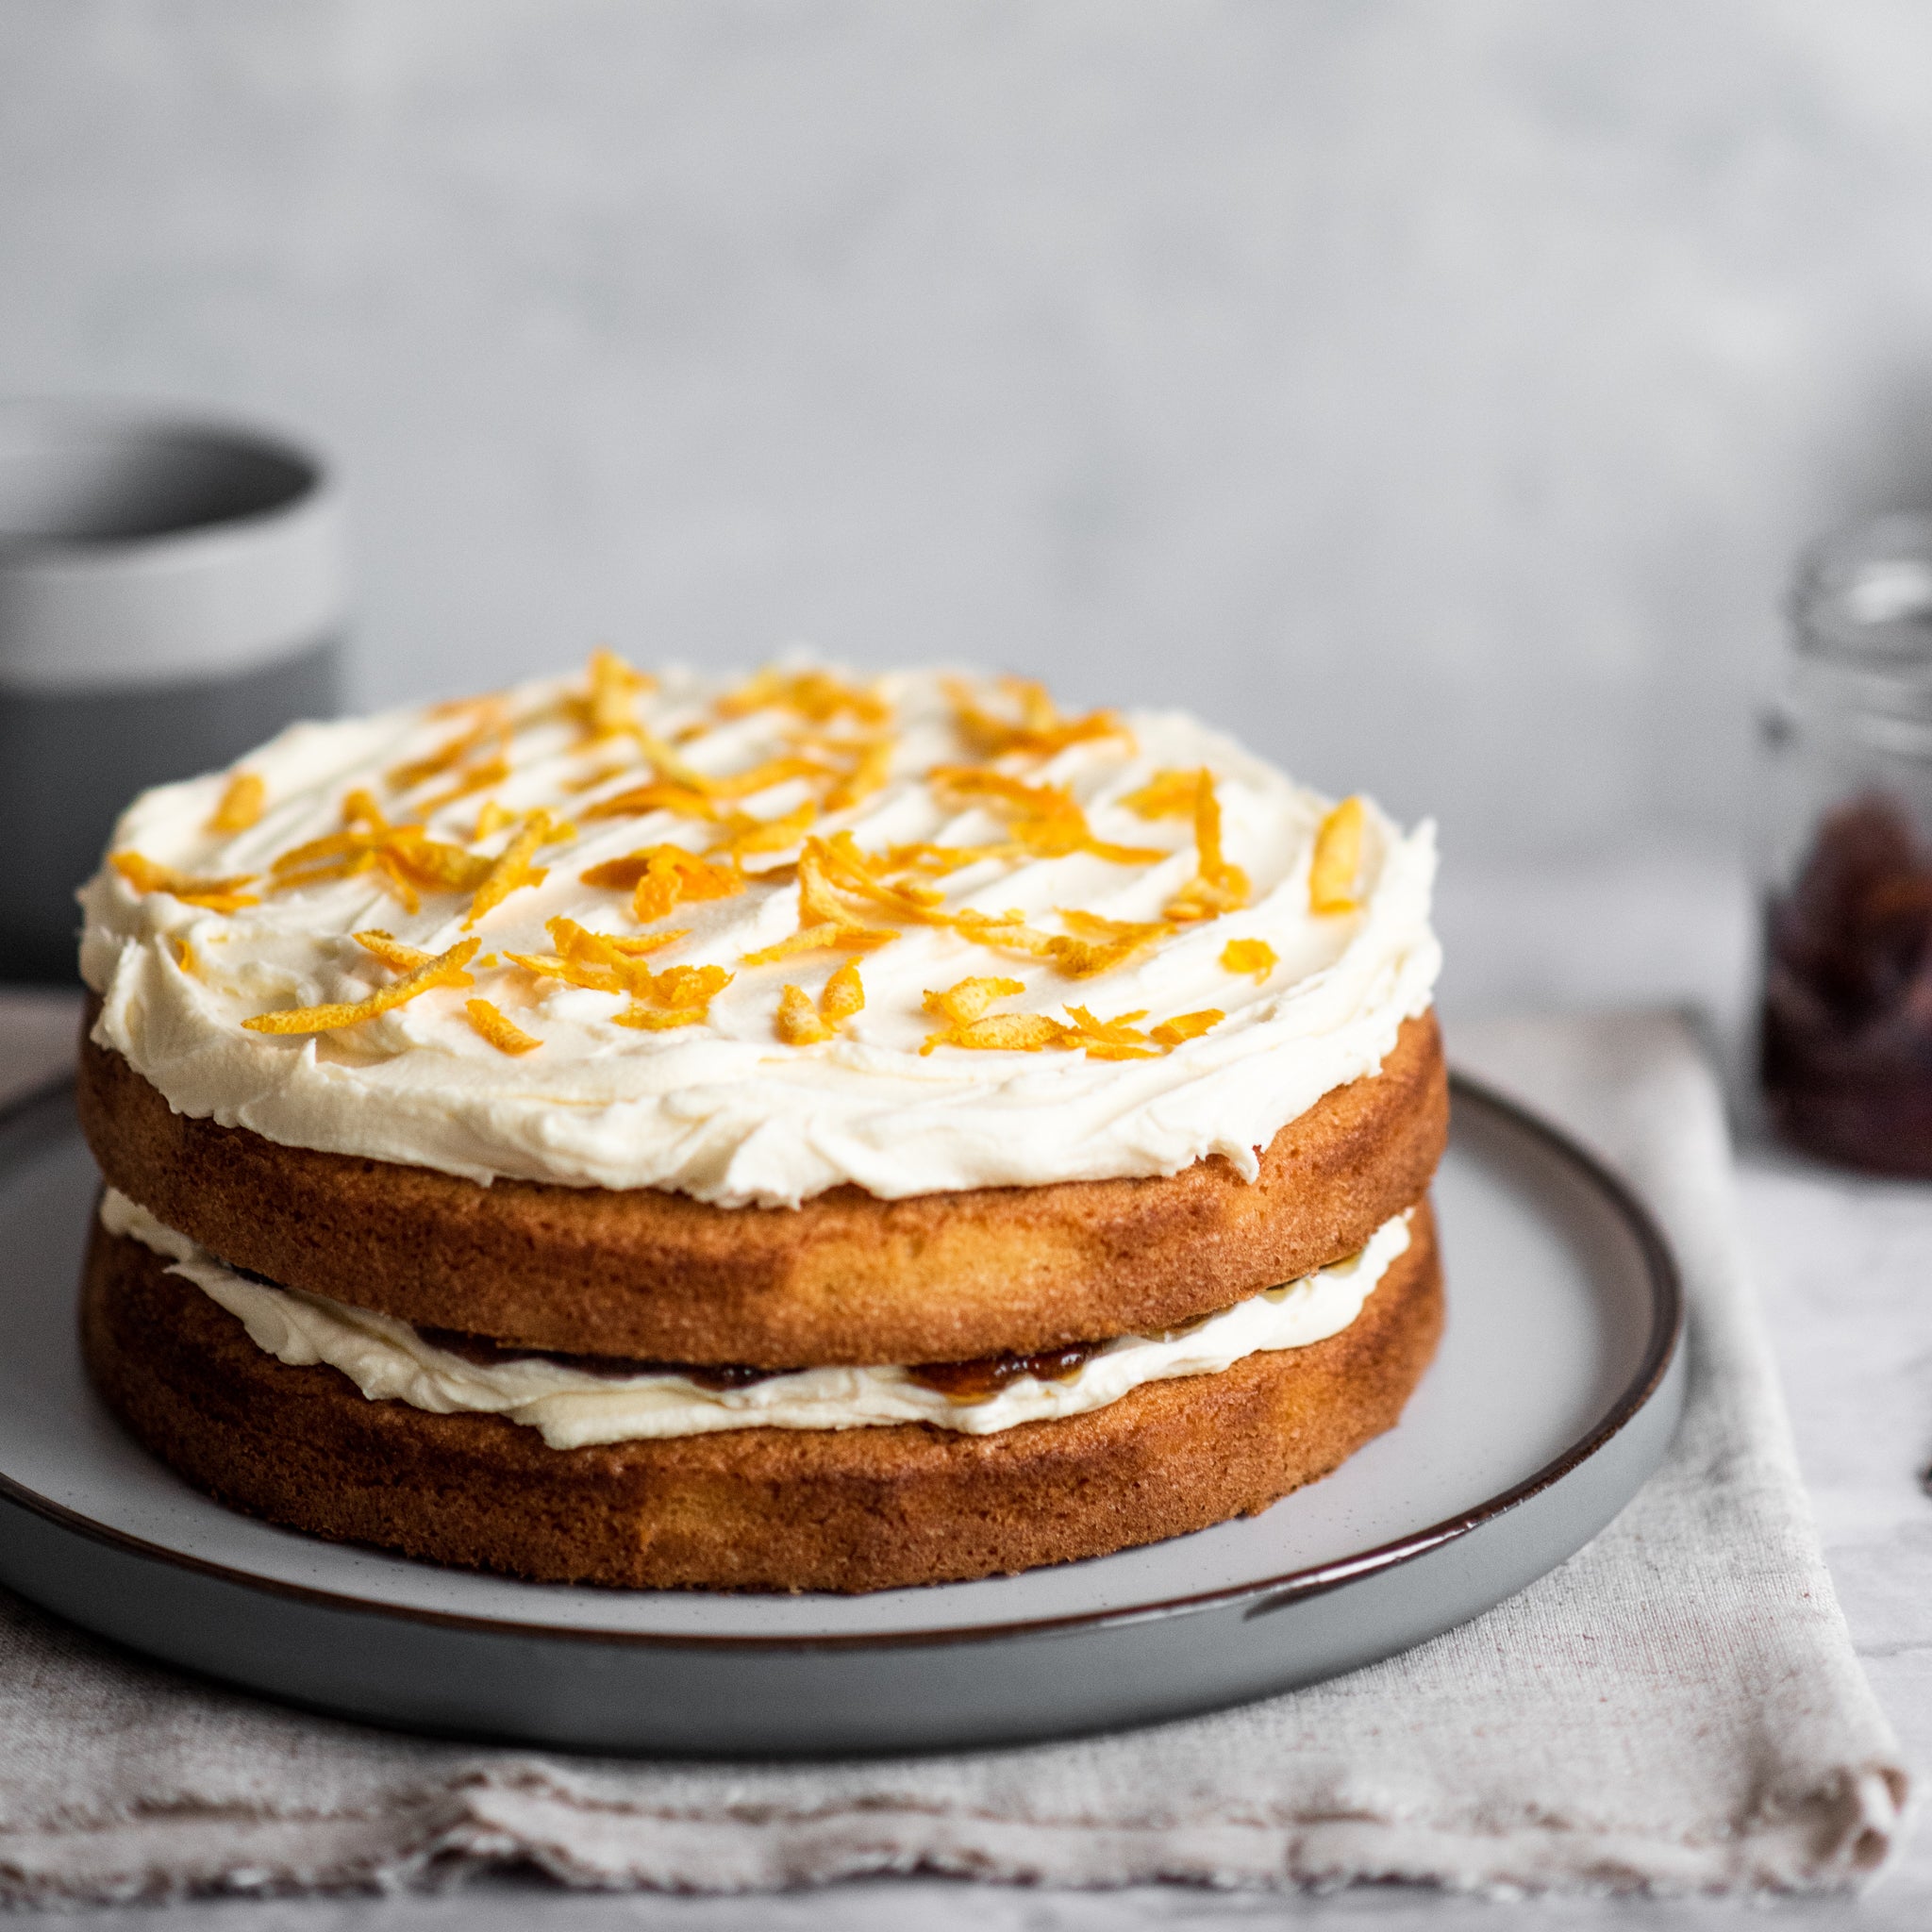 Layered Marmalade Cake Recipe | How to Make Layered Marmalade Cake ...